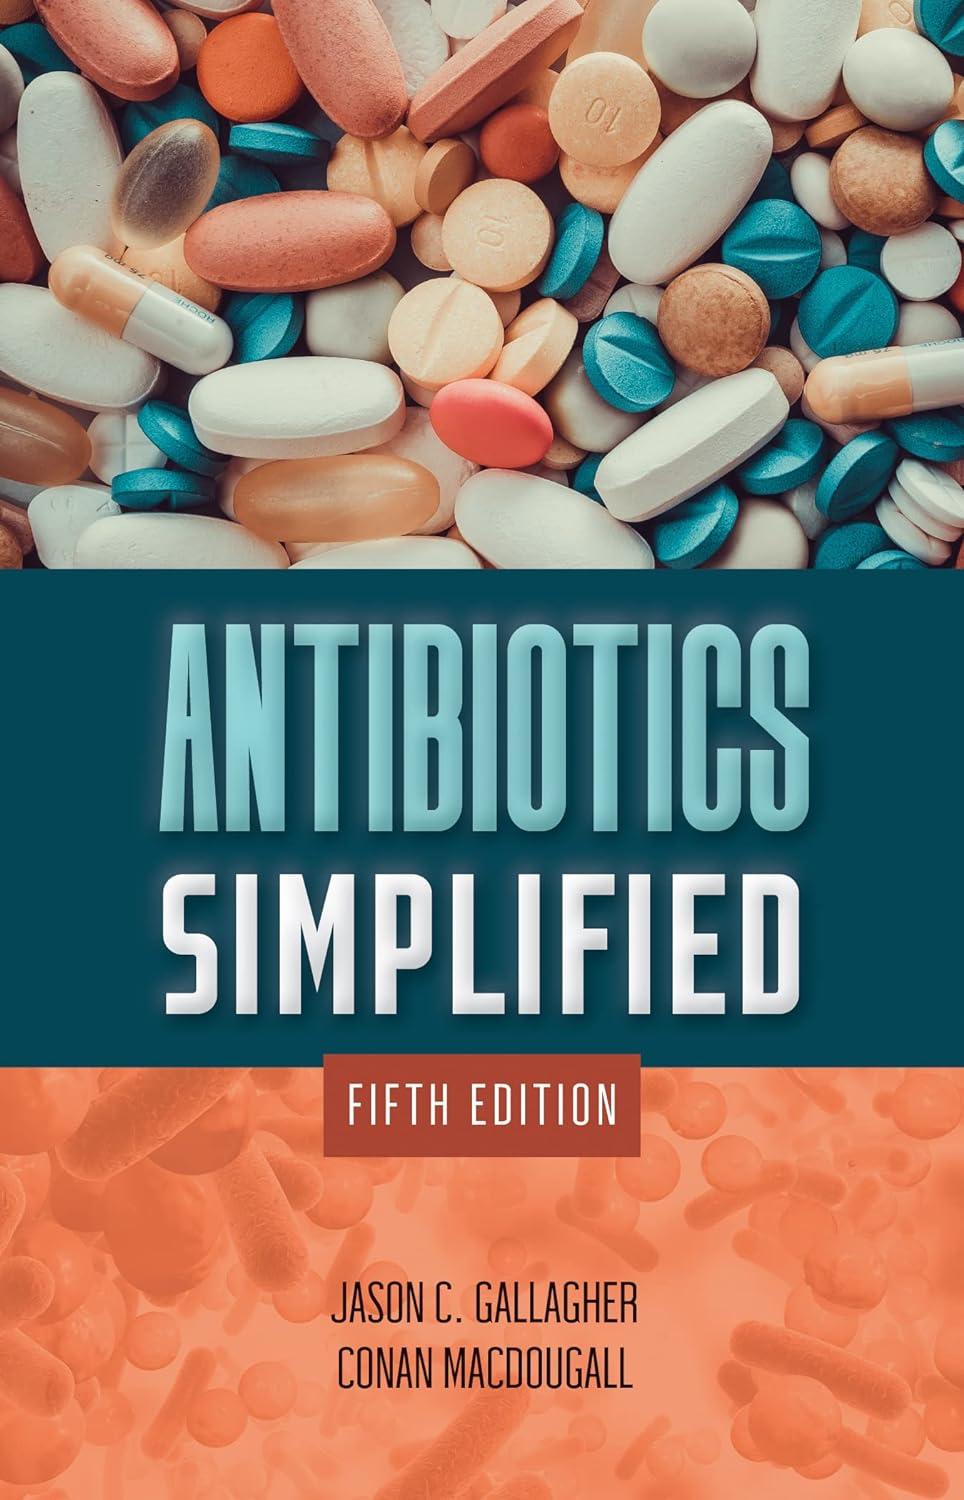 antibiotics simplified 5th edition jason c. gallagher, conan macdougall 1284250067, 978-1284250060